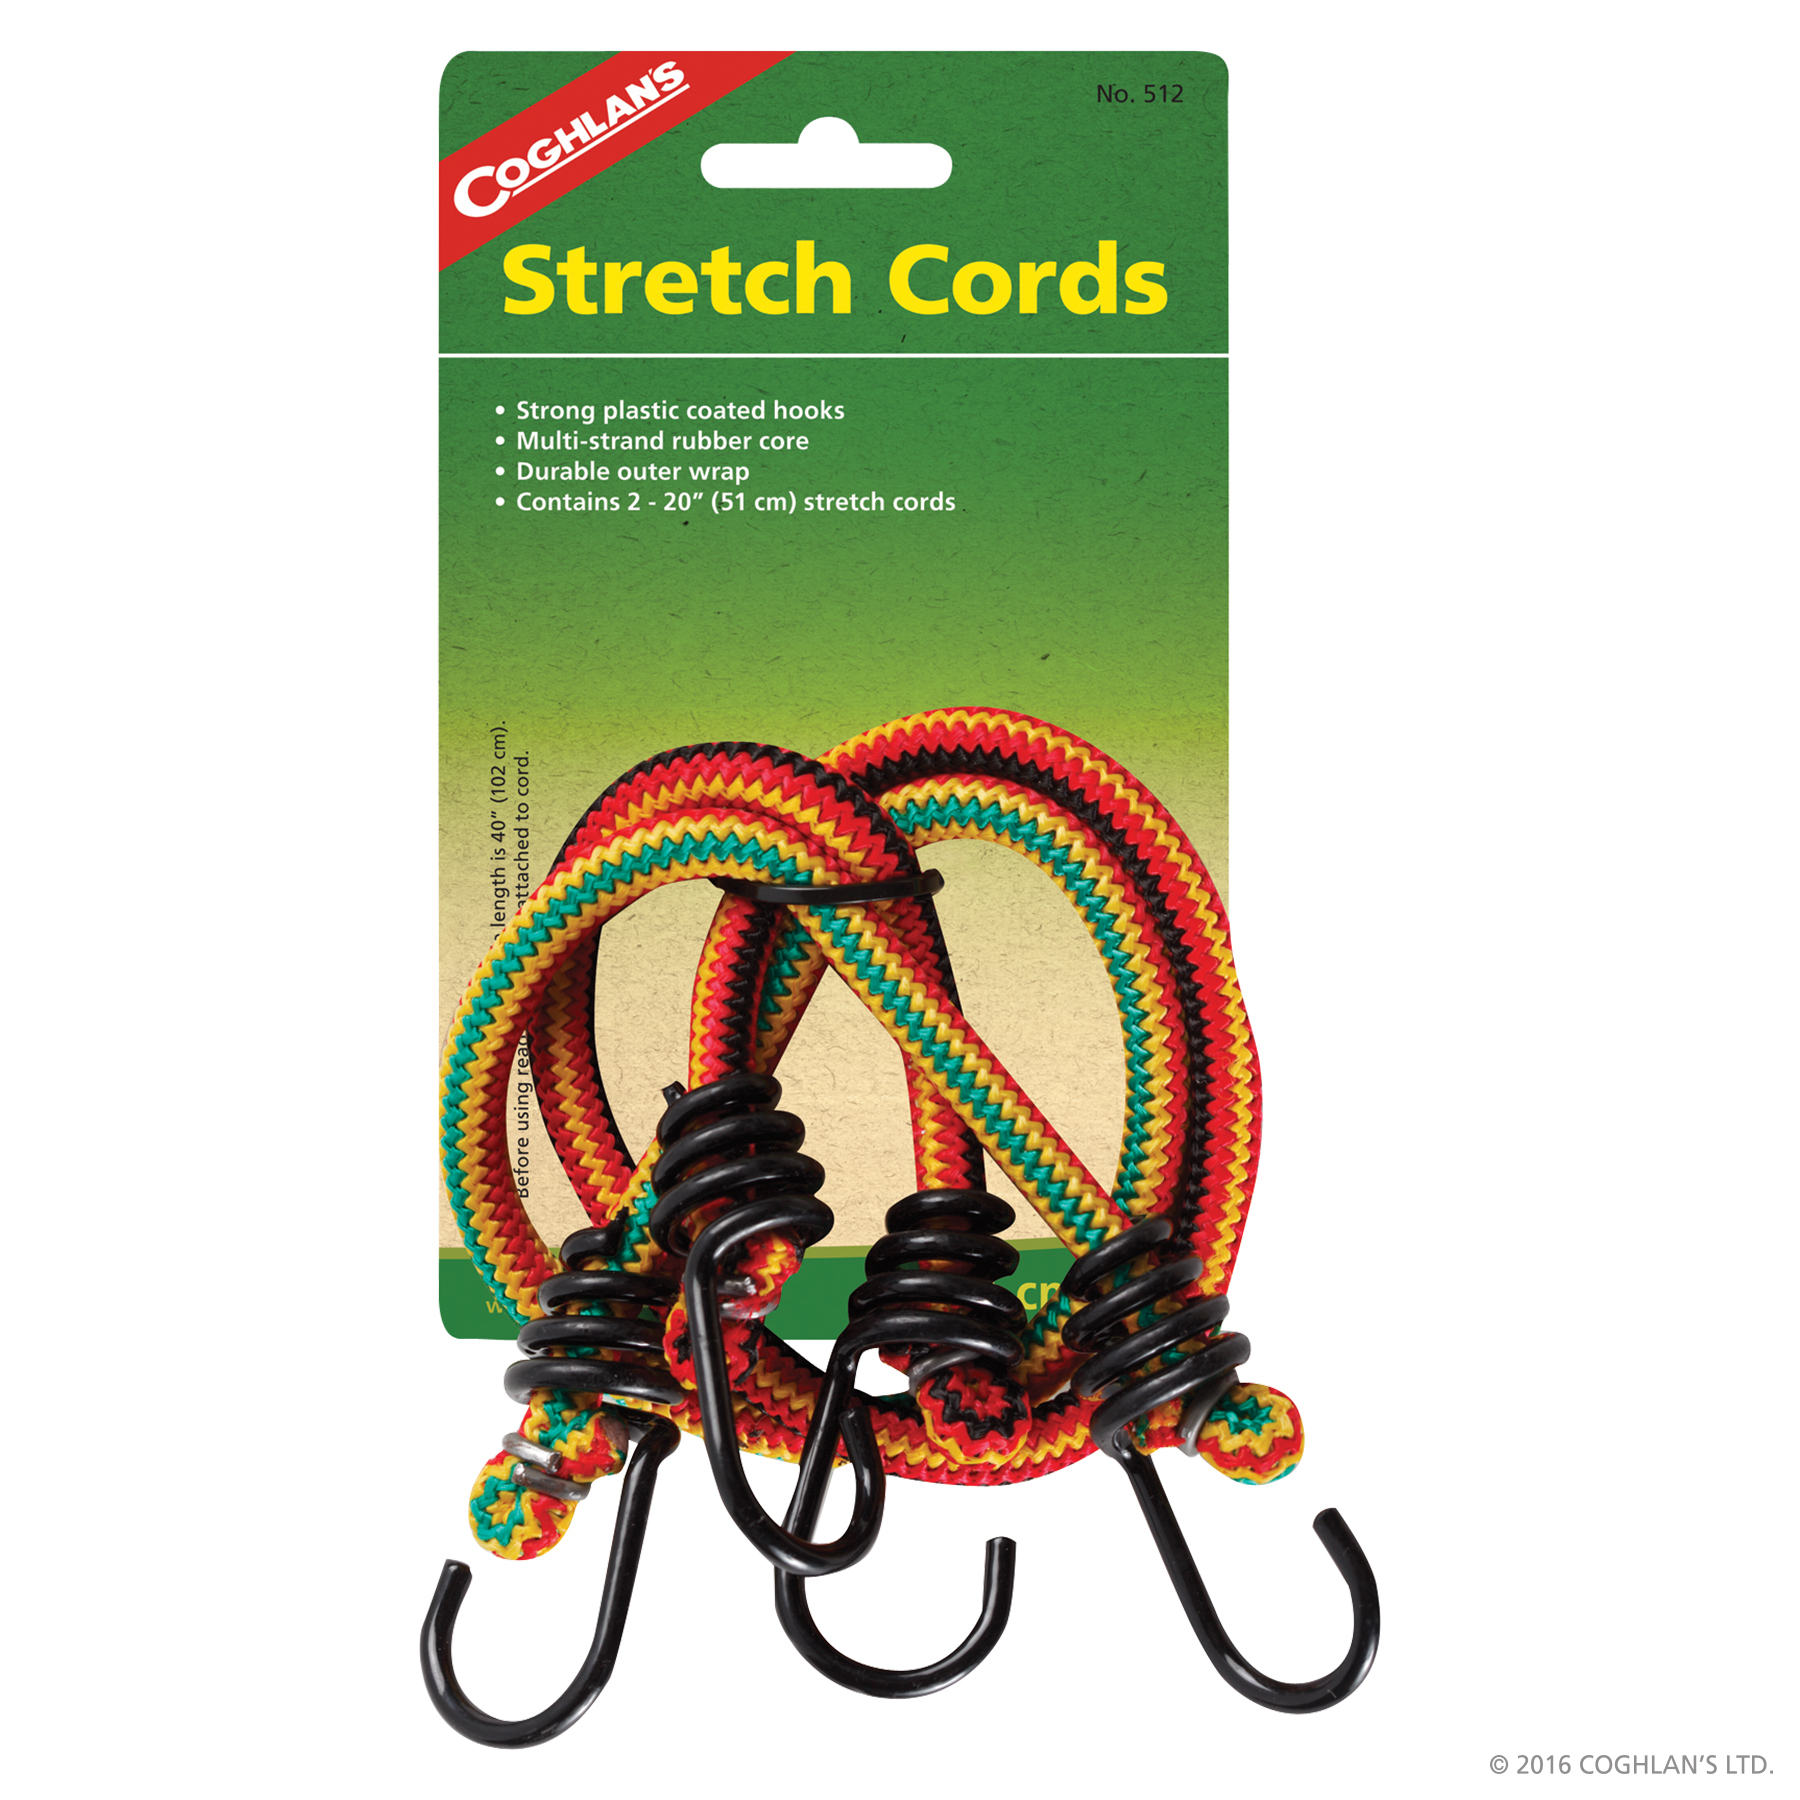 Coghlan's Stretch Cord